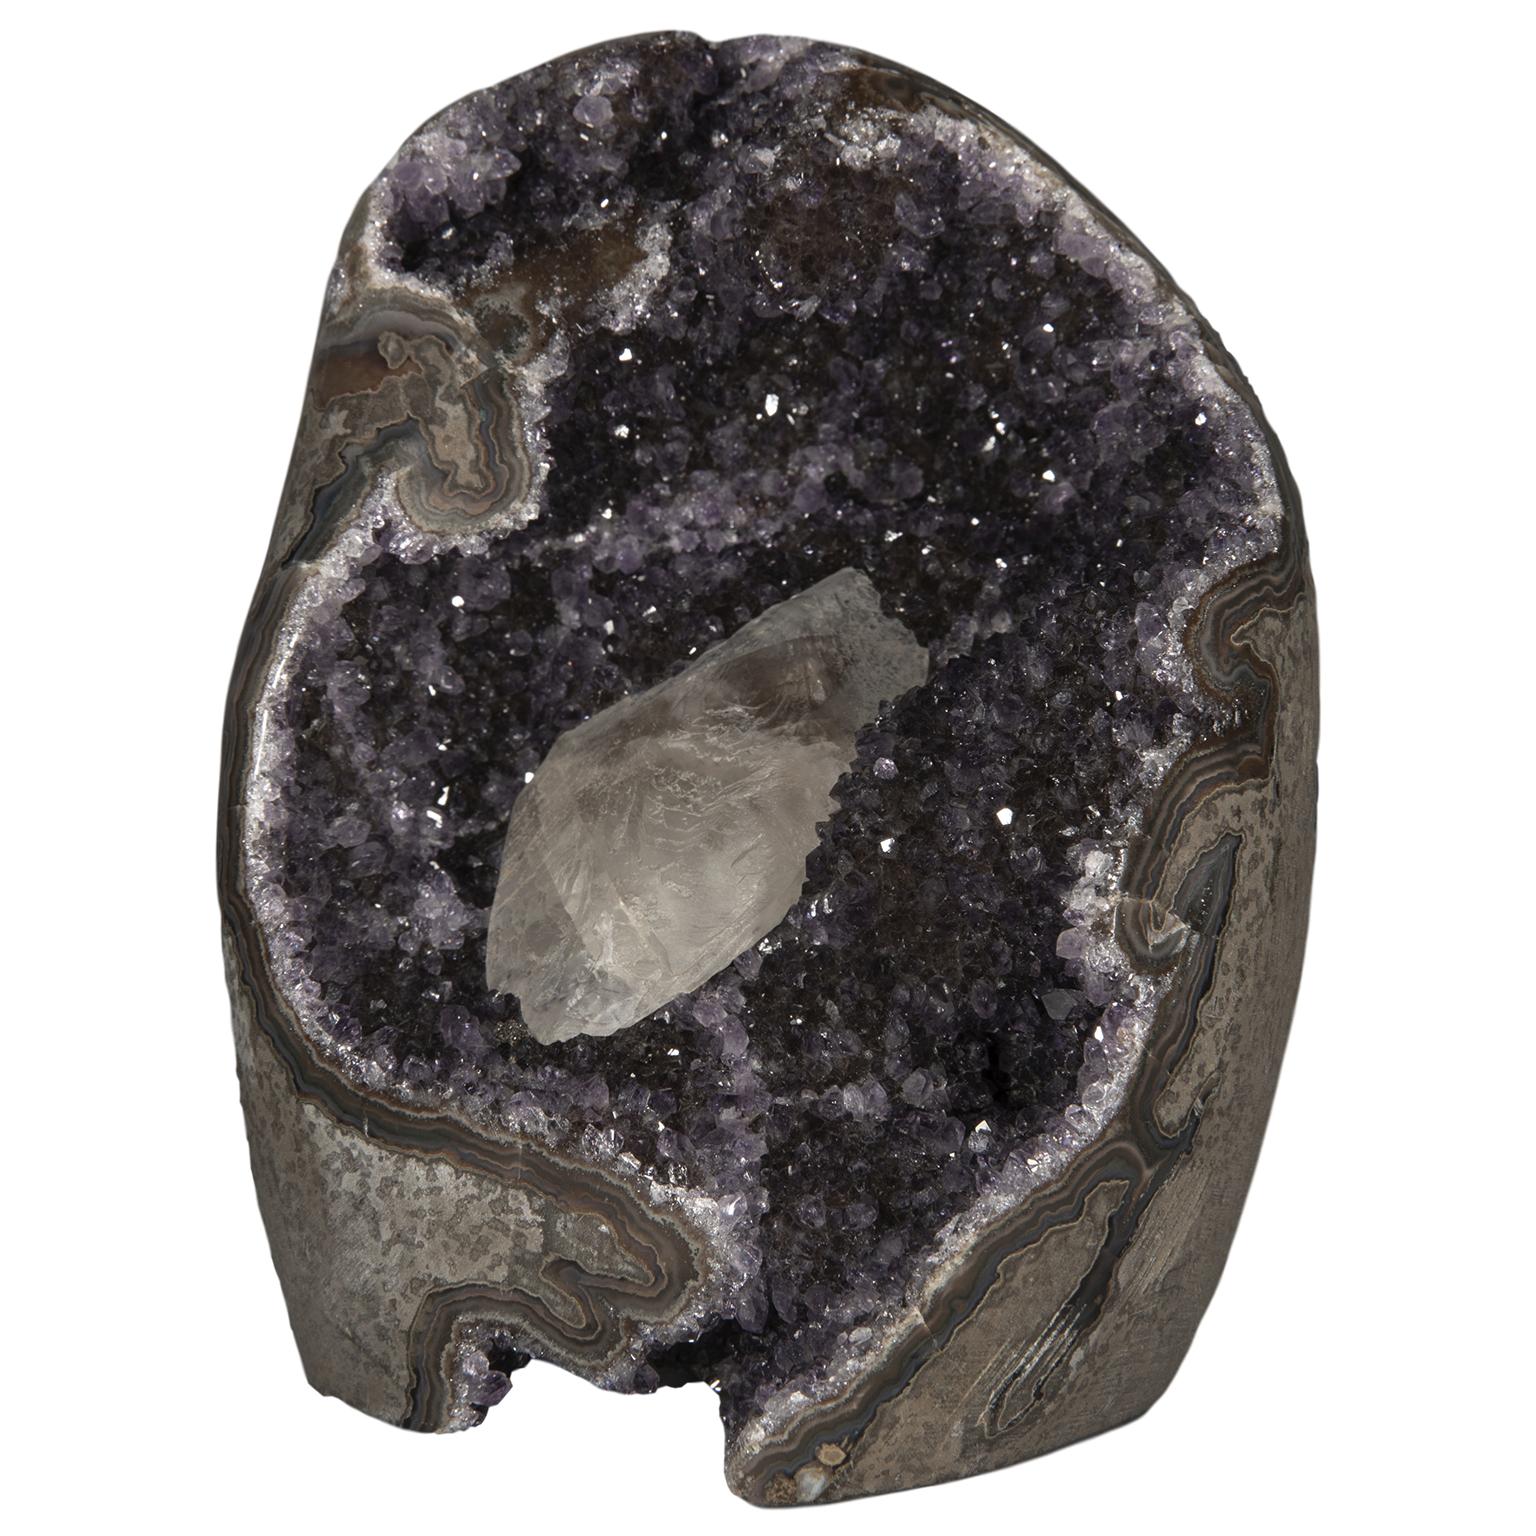 Amethyst Purple Druze Quartz with Calcite Formation 1